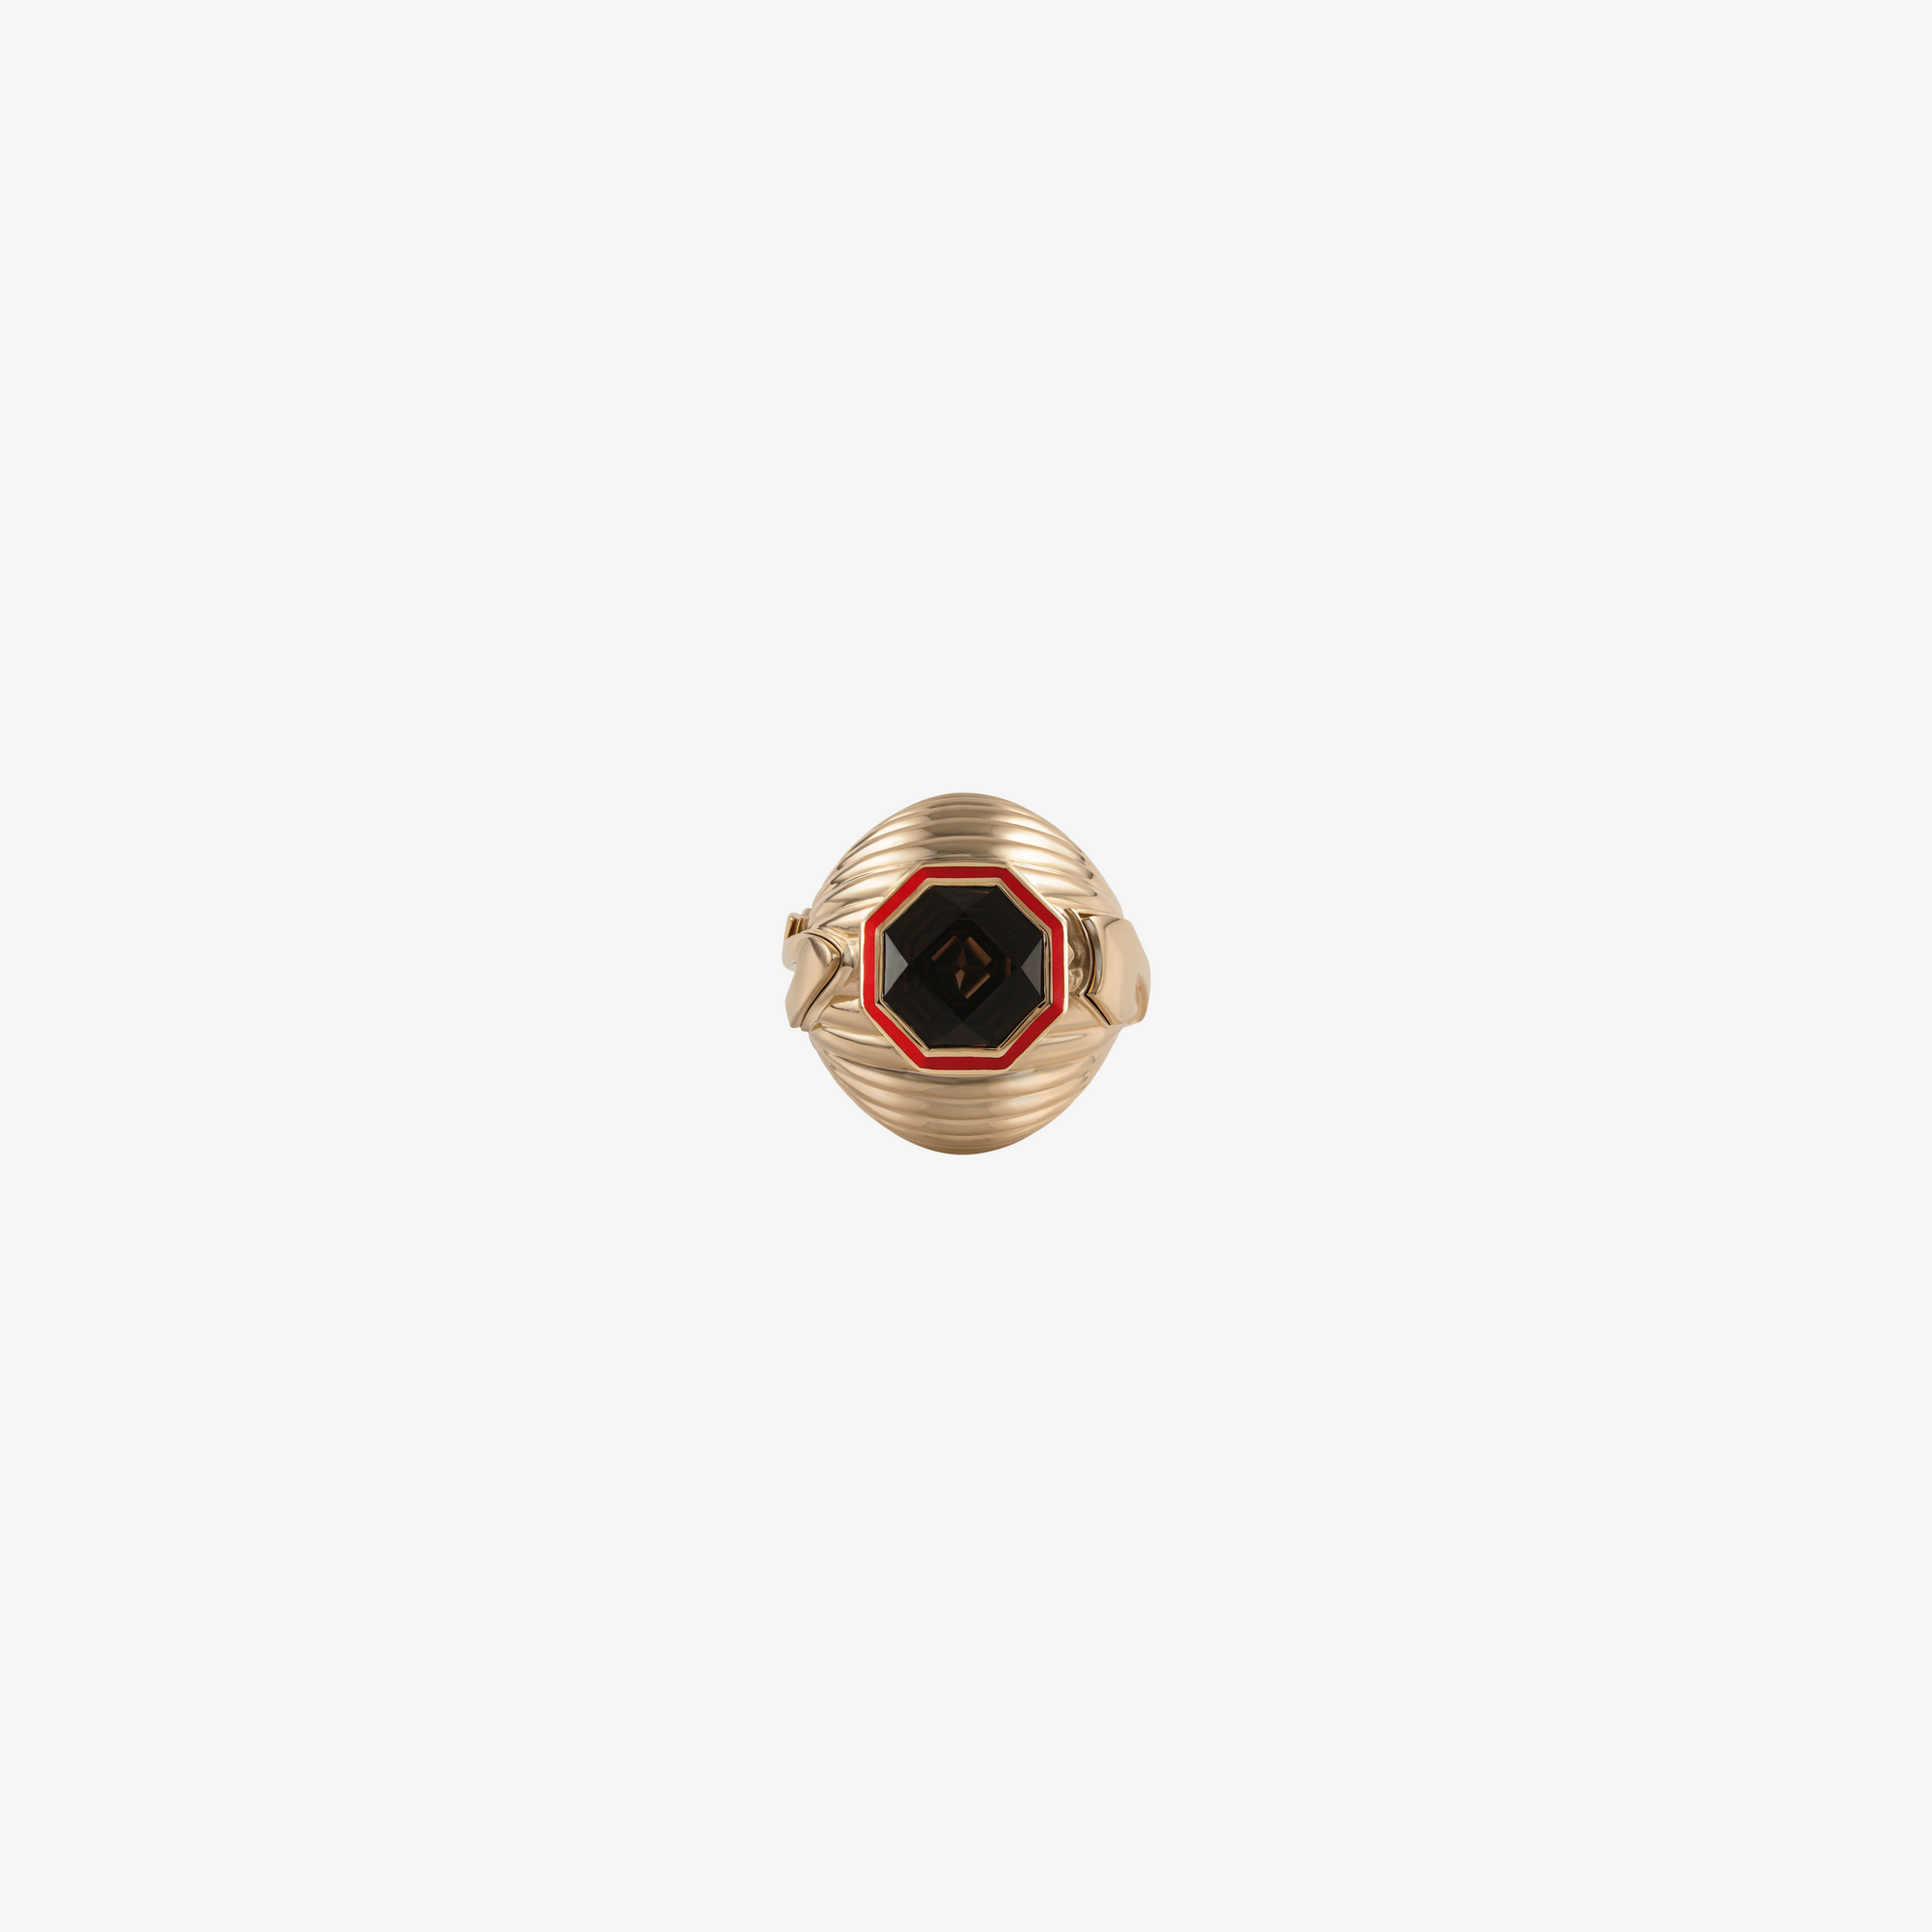 TAIM - 18K Gold, Enamel & Quartz "Love" Ring